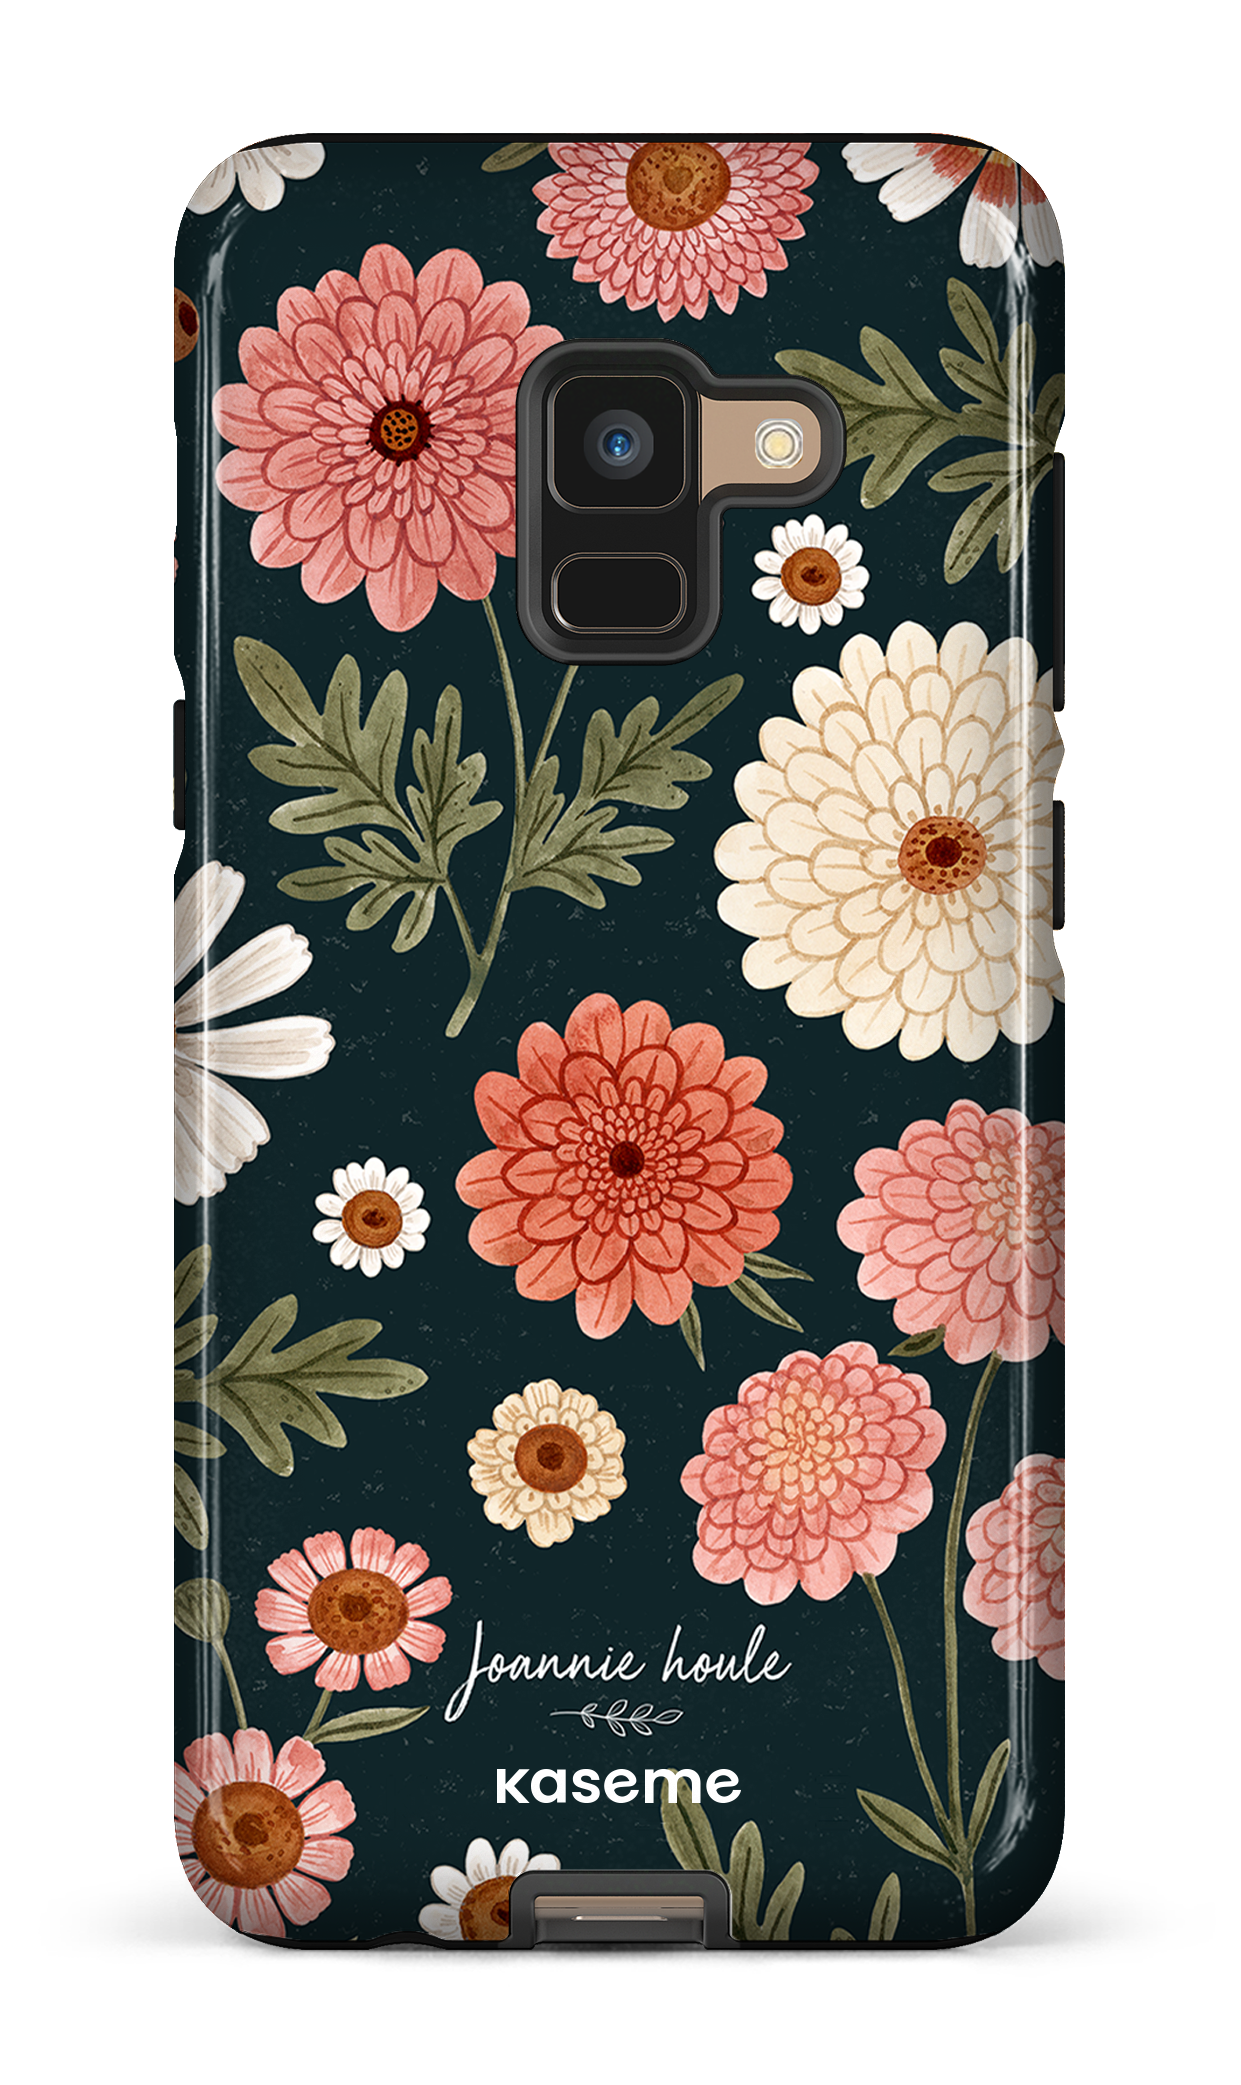 Chrysanthemums by Joannie Houle - Galaxy A8